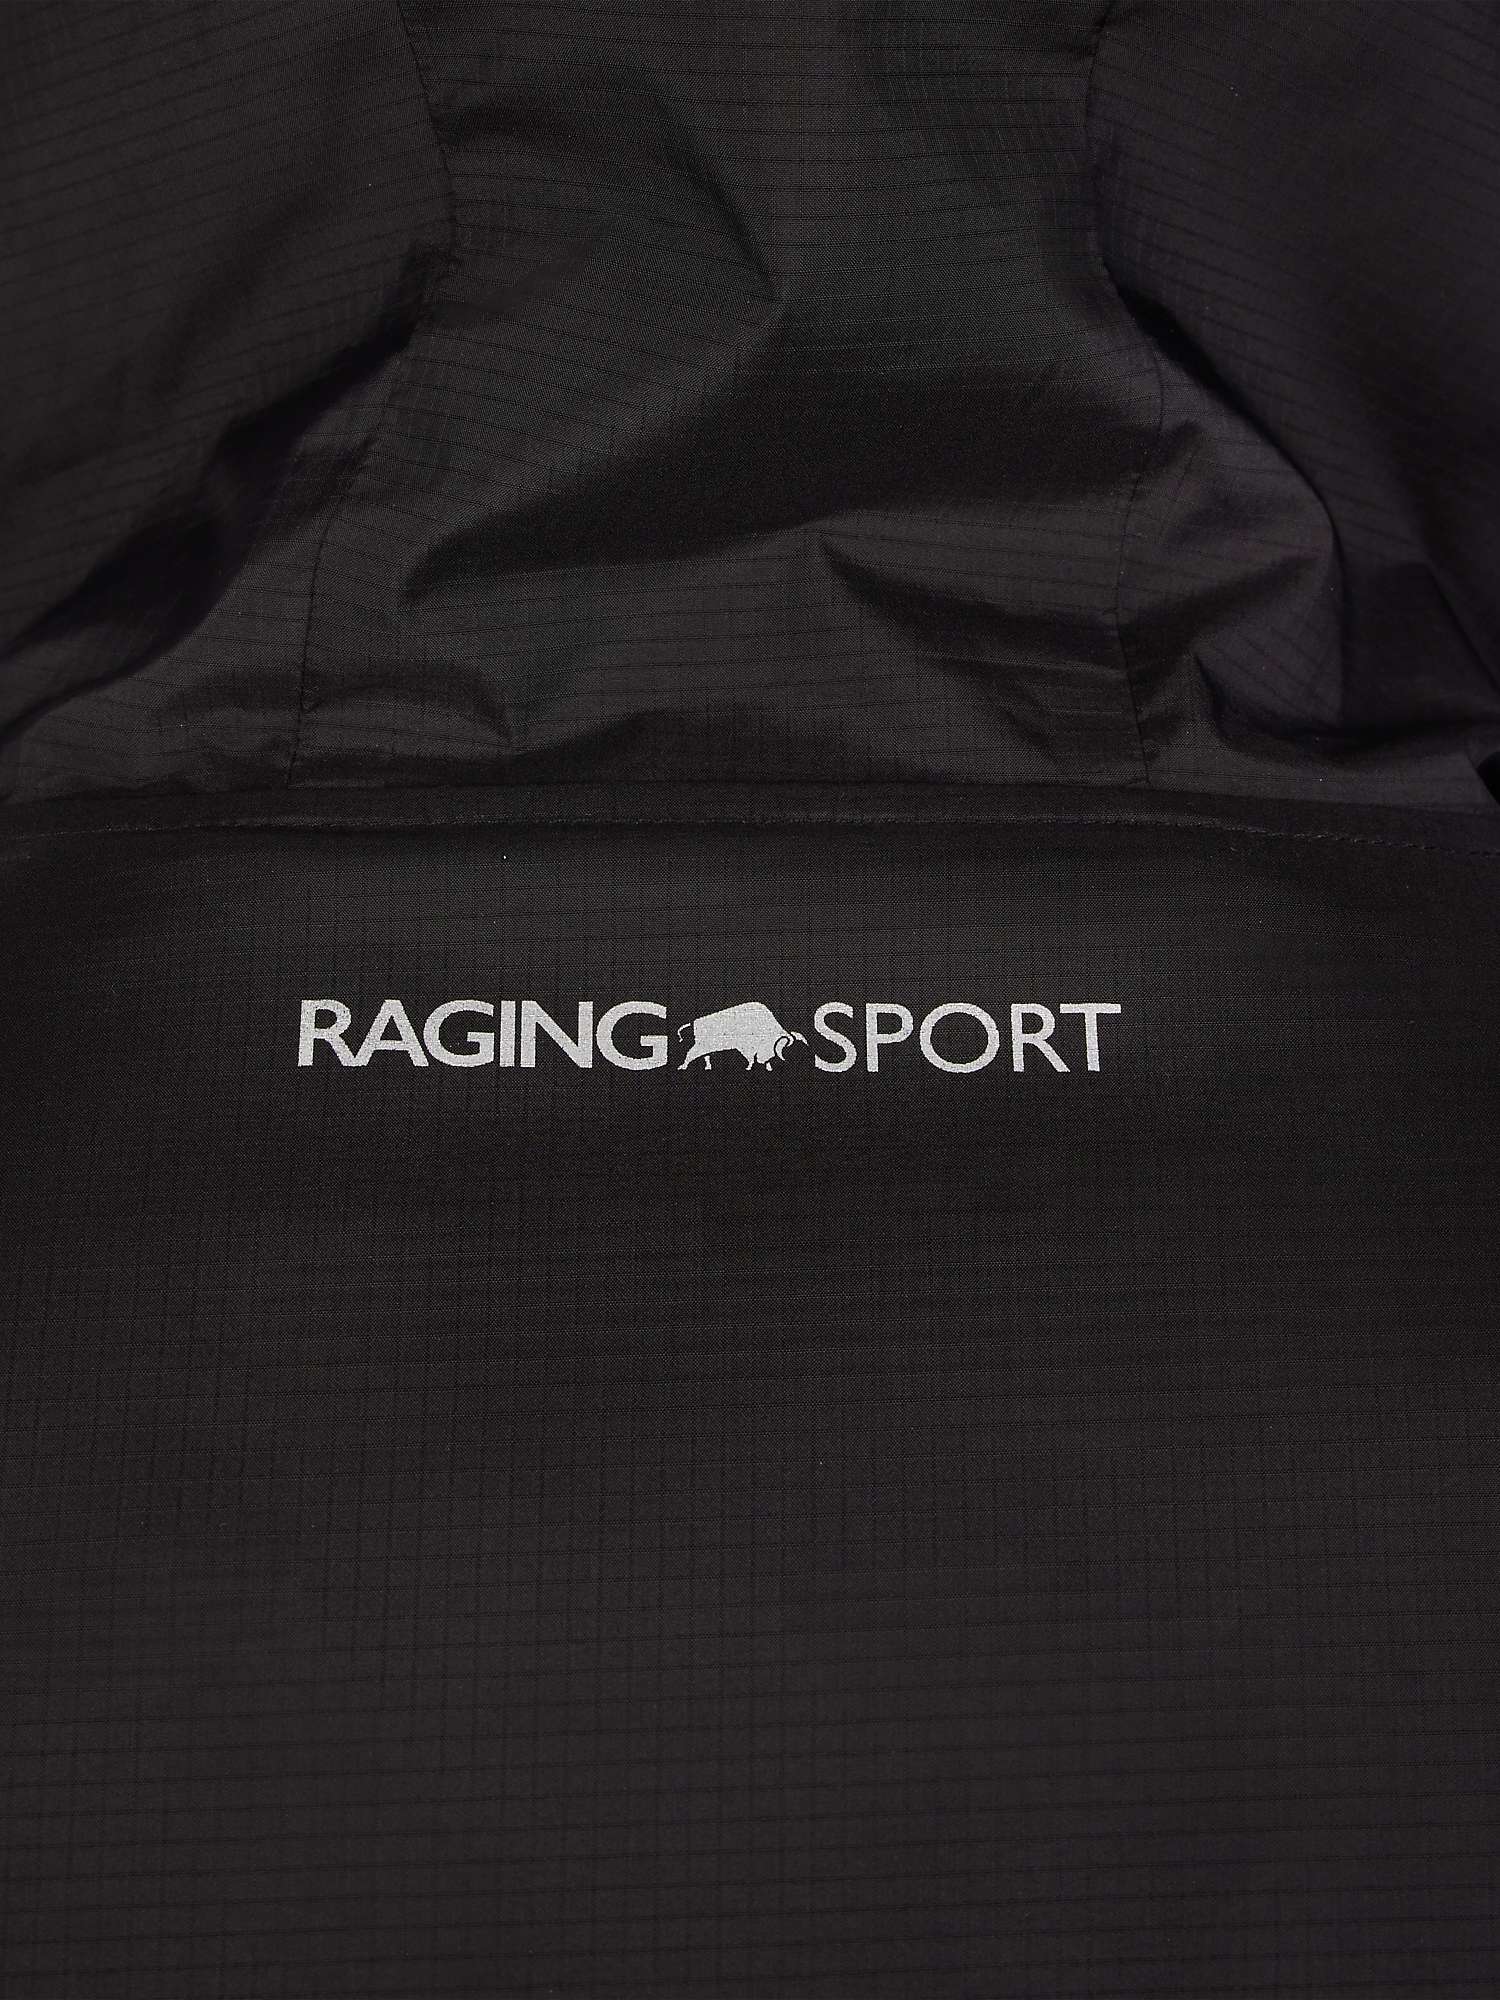 Buy Raging Bull Performance Shower Proof Zip Jacket, Black Online at johnlewis.com